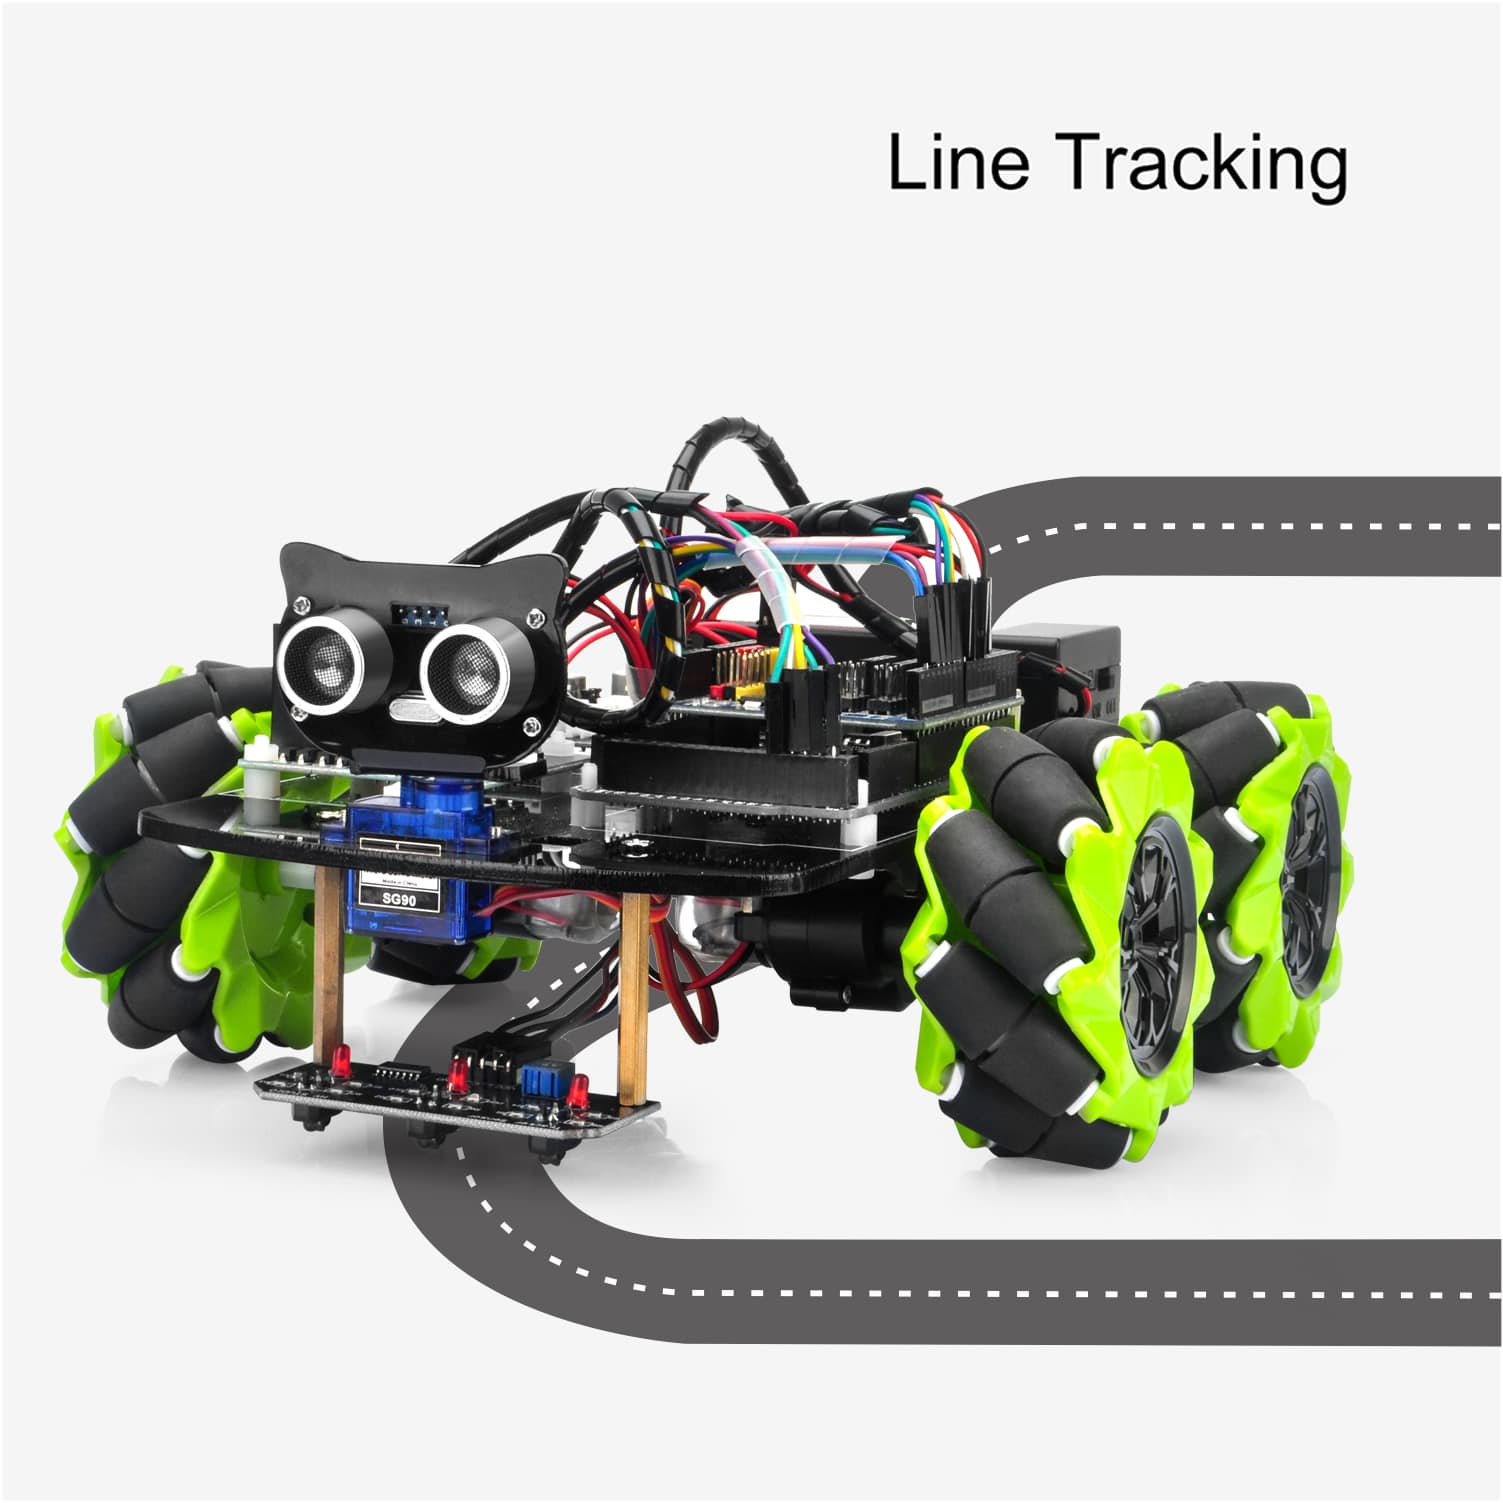 Mecanum Wheel Robotic(for Arduino Mega2560) Lesson 3: 3-Point Tracking Line